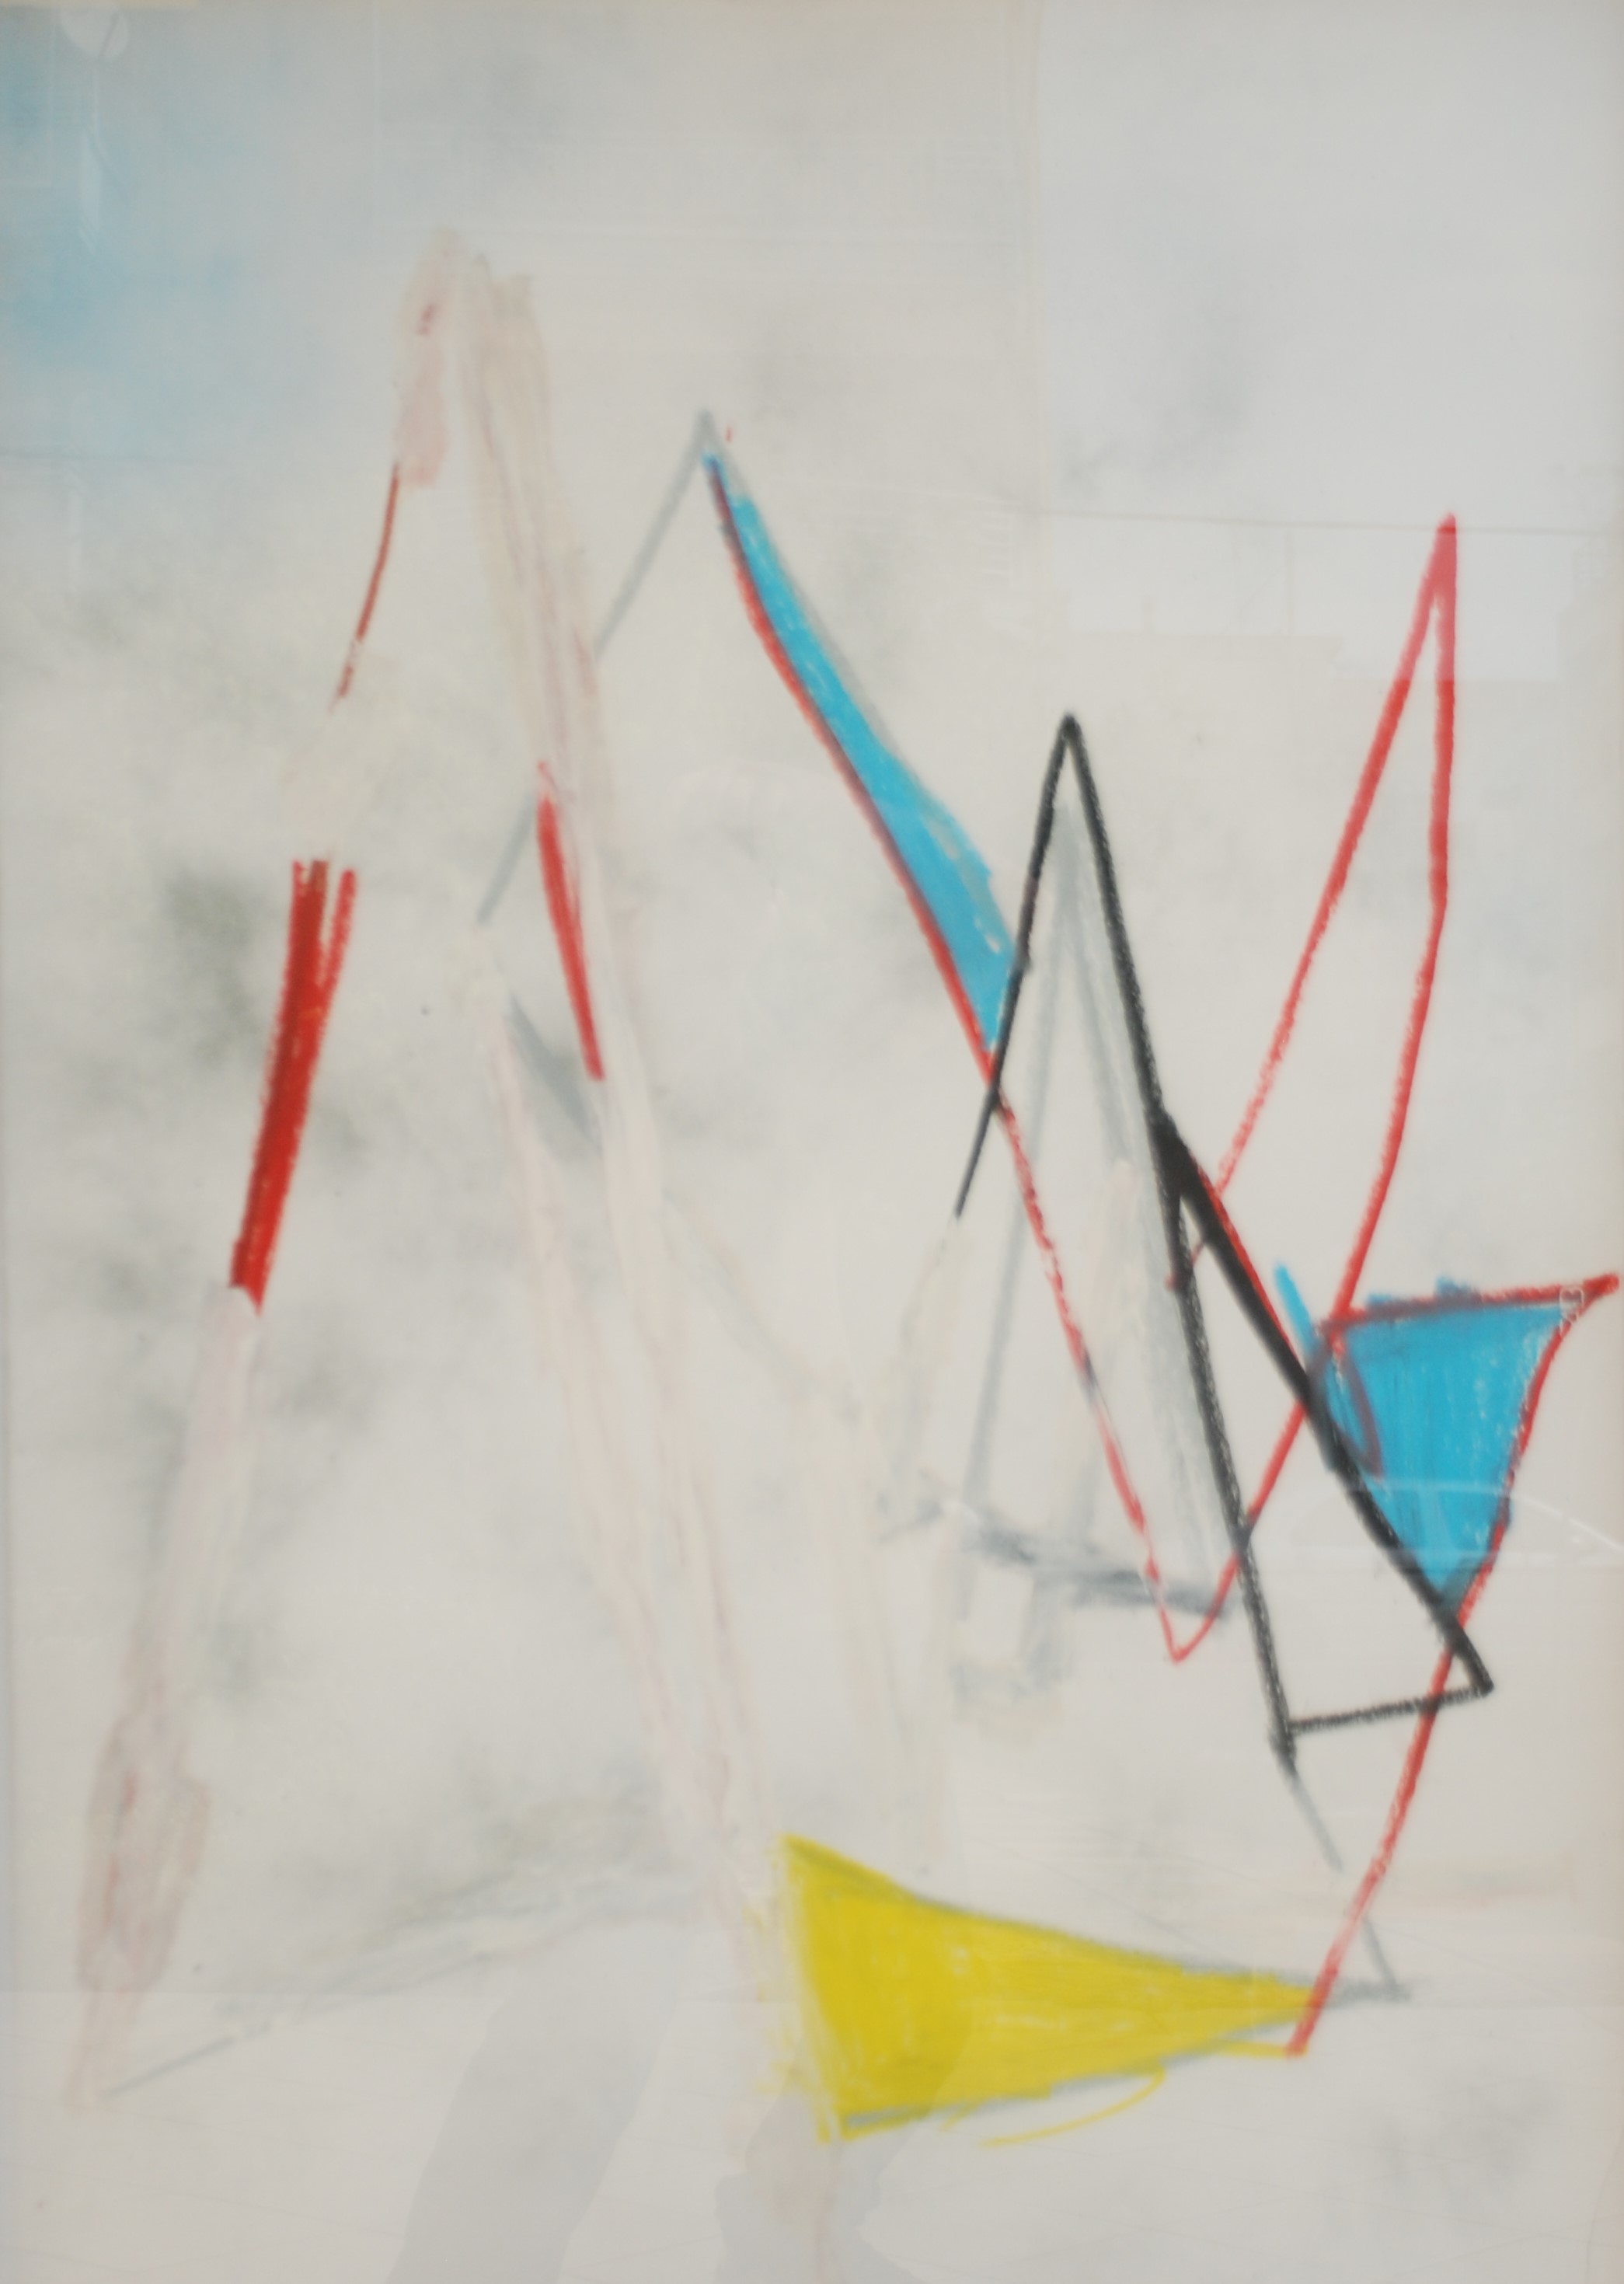 Model, 100cm x 70cm , oil pastel on paper, 2015